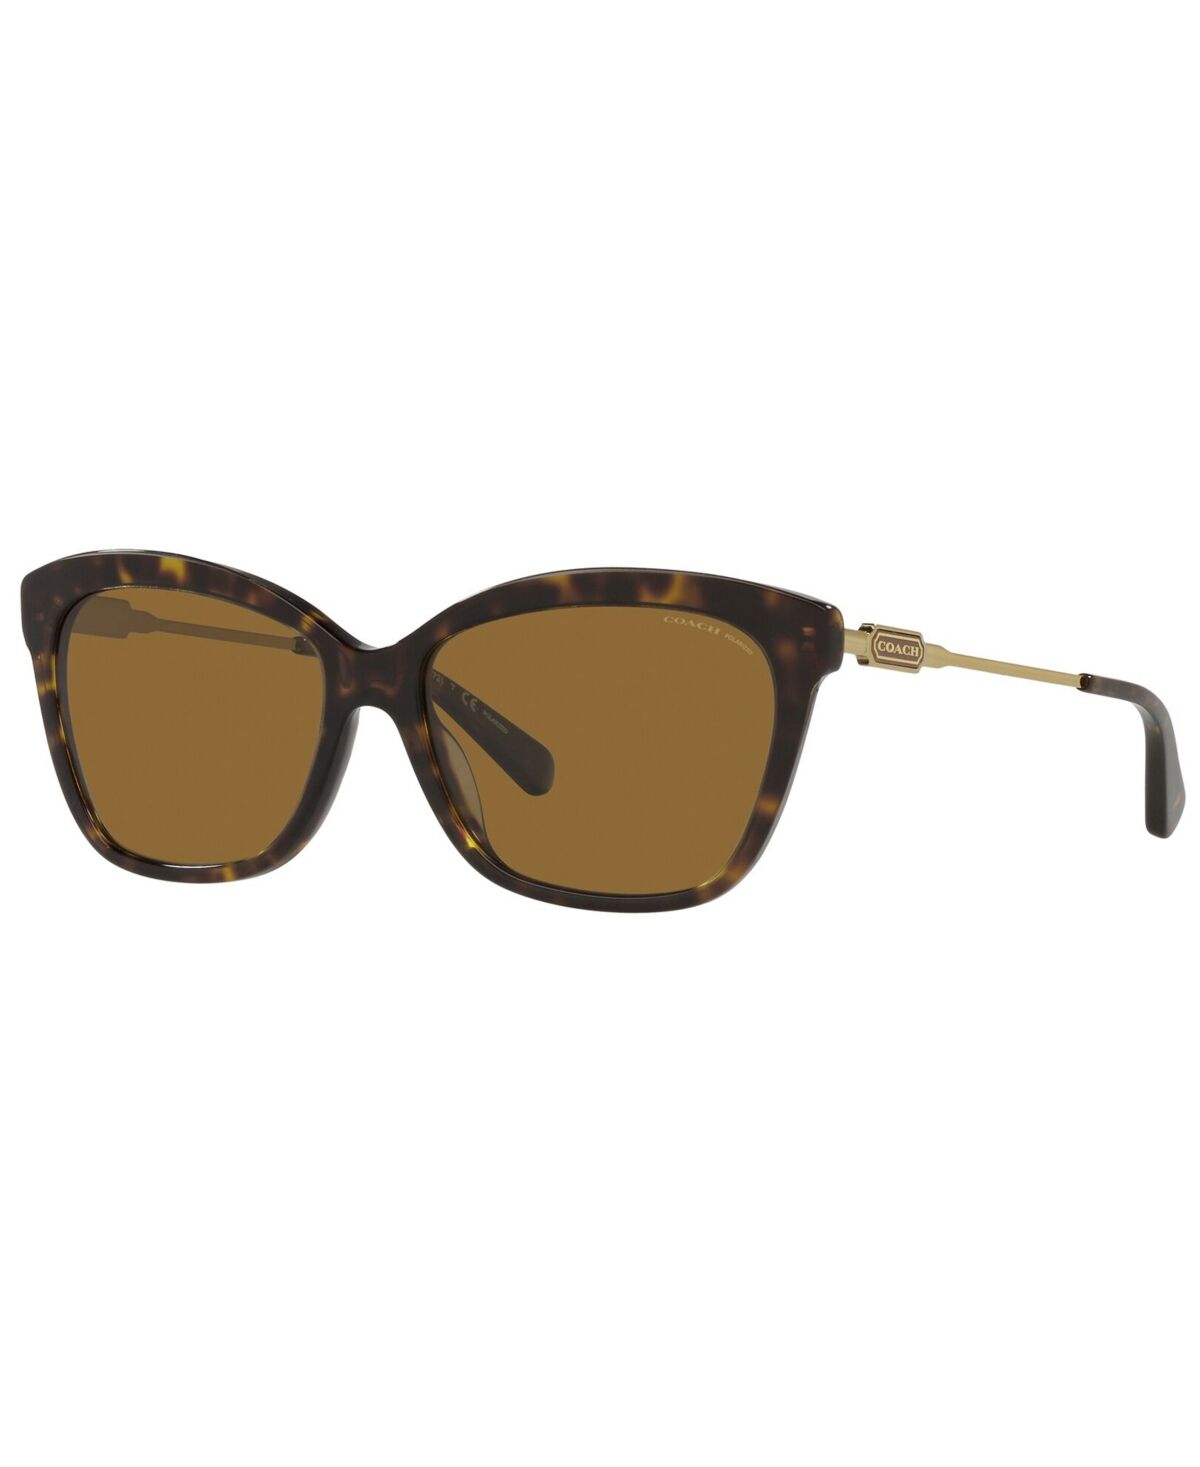 Coach Women's Polarized Sunglasses, HC8305 57 L1168 - DARK TORTOISE/BROWN POLAR